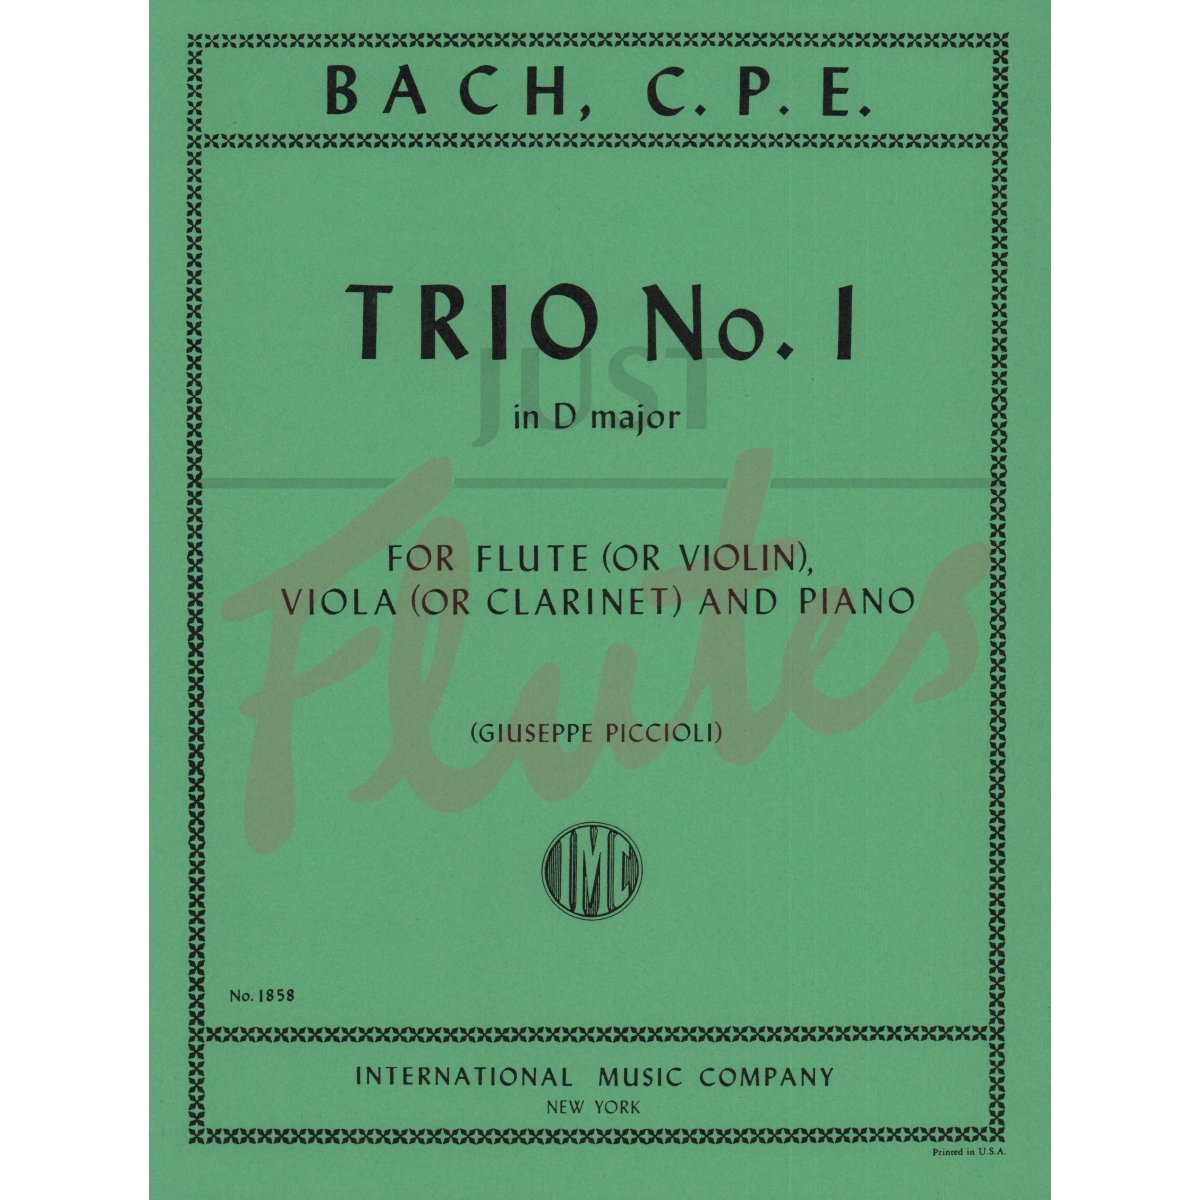 Trio No 1 in D major for Flute/Violin, Viola/Clarinet and Piano